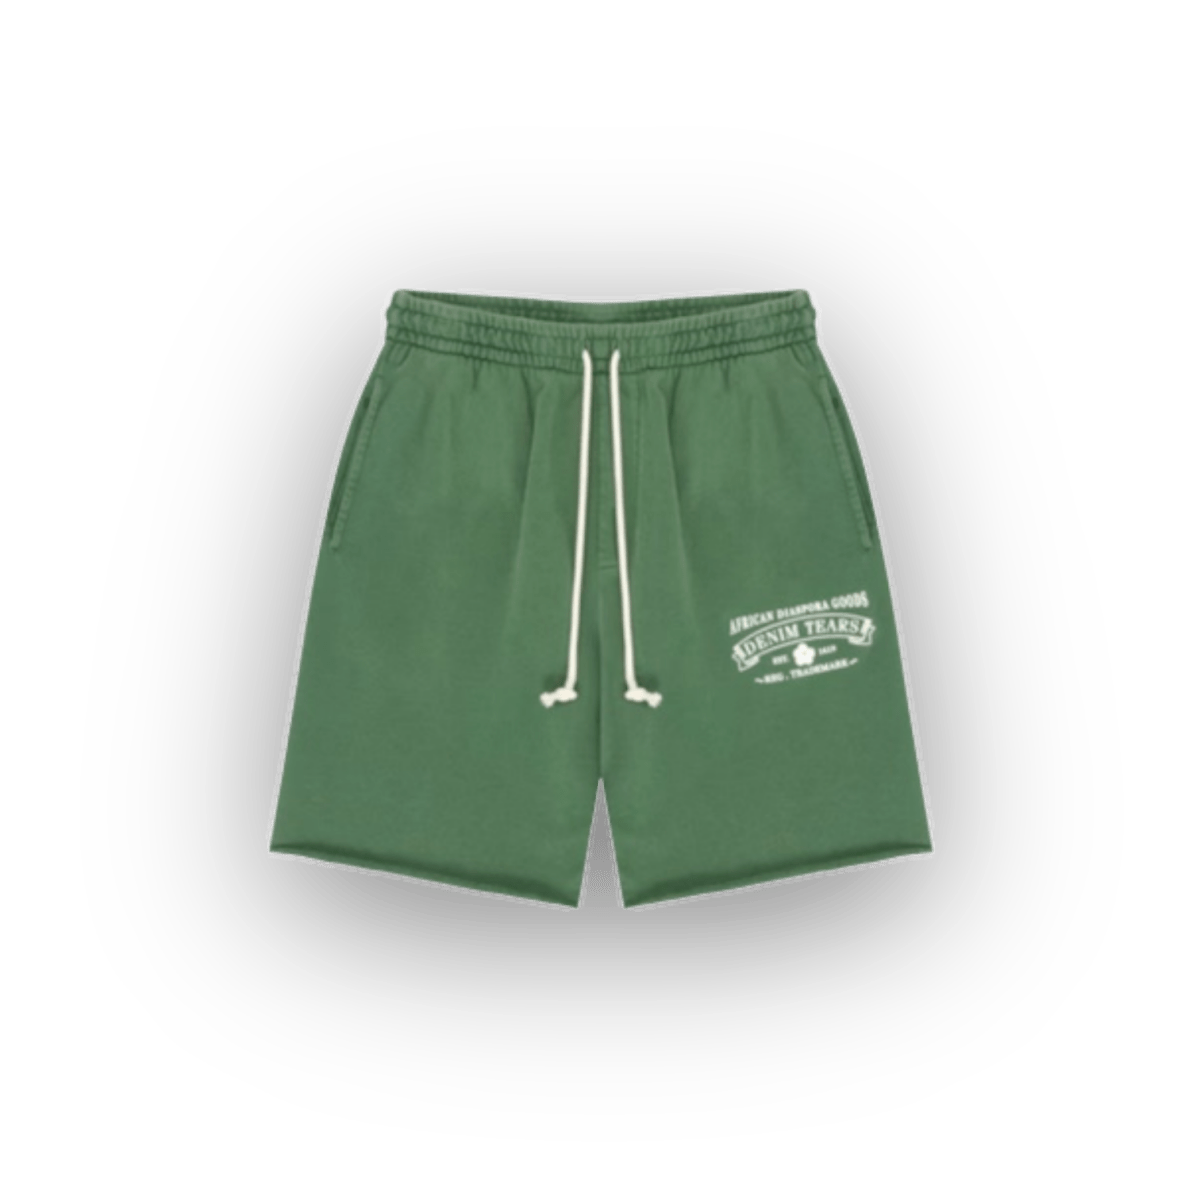 Denim Tears ADG Washed Green Sweat Shorts - Clothing - Jawns on Fire Sneakers & Streetwear